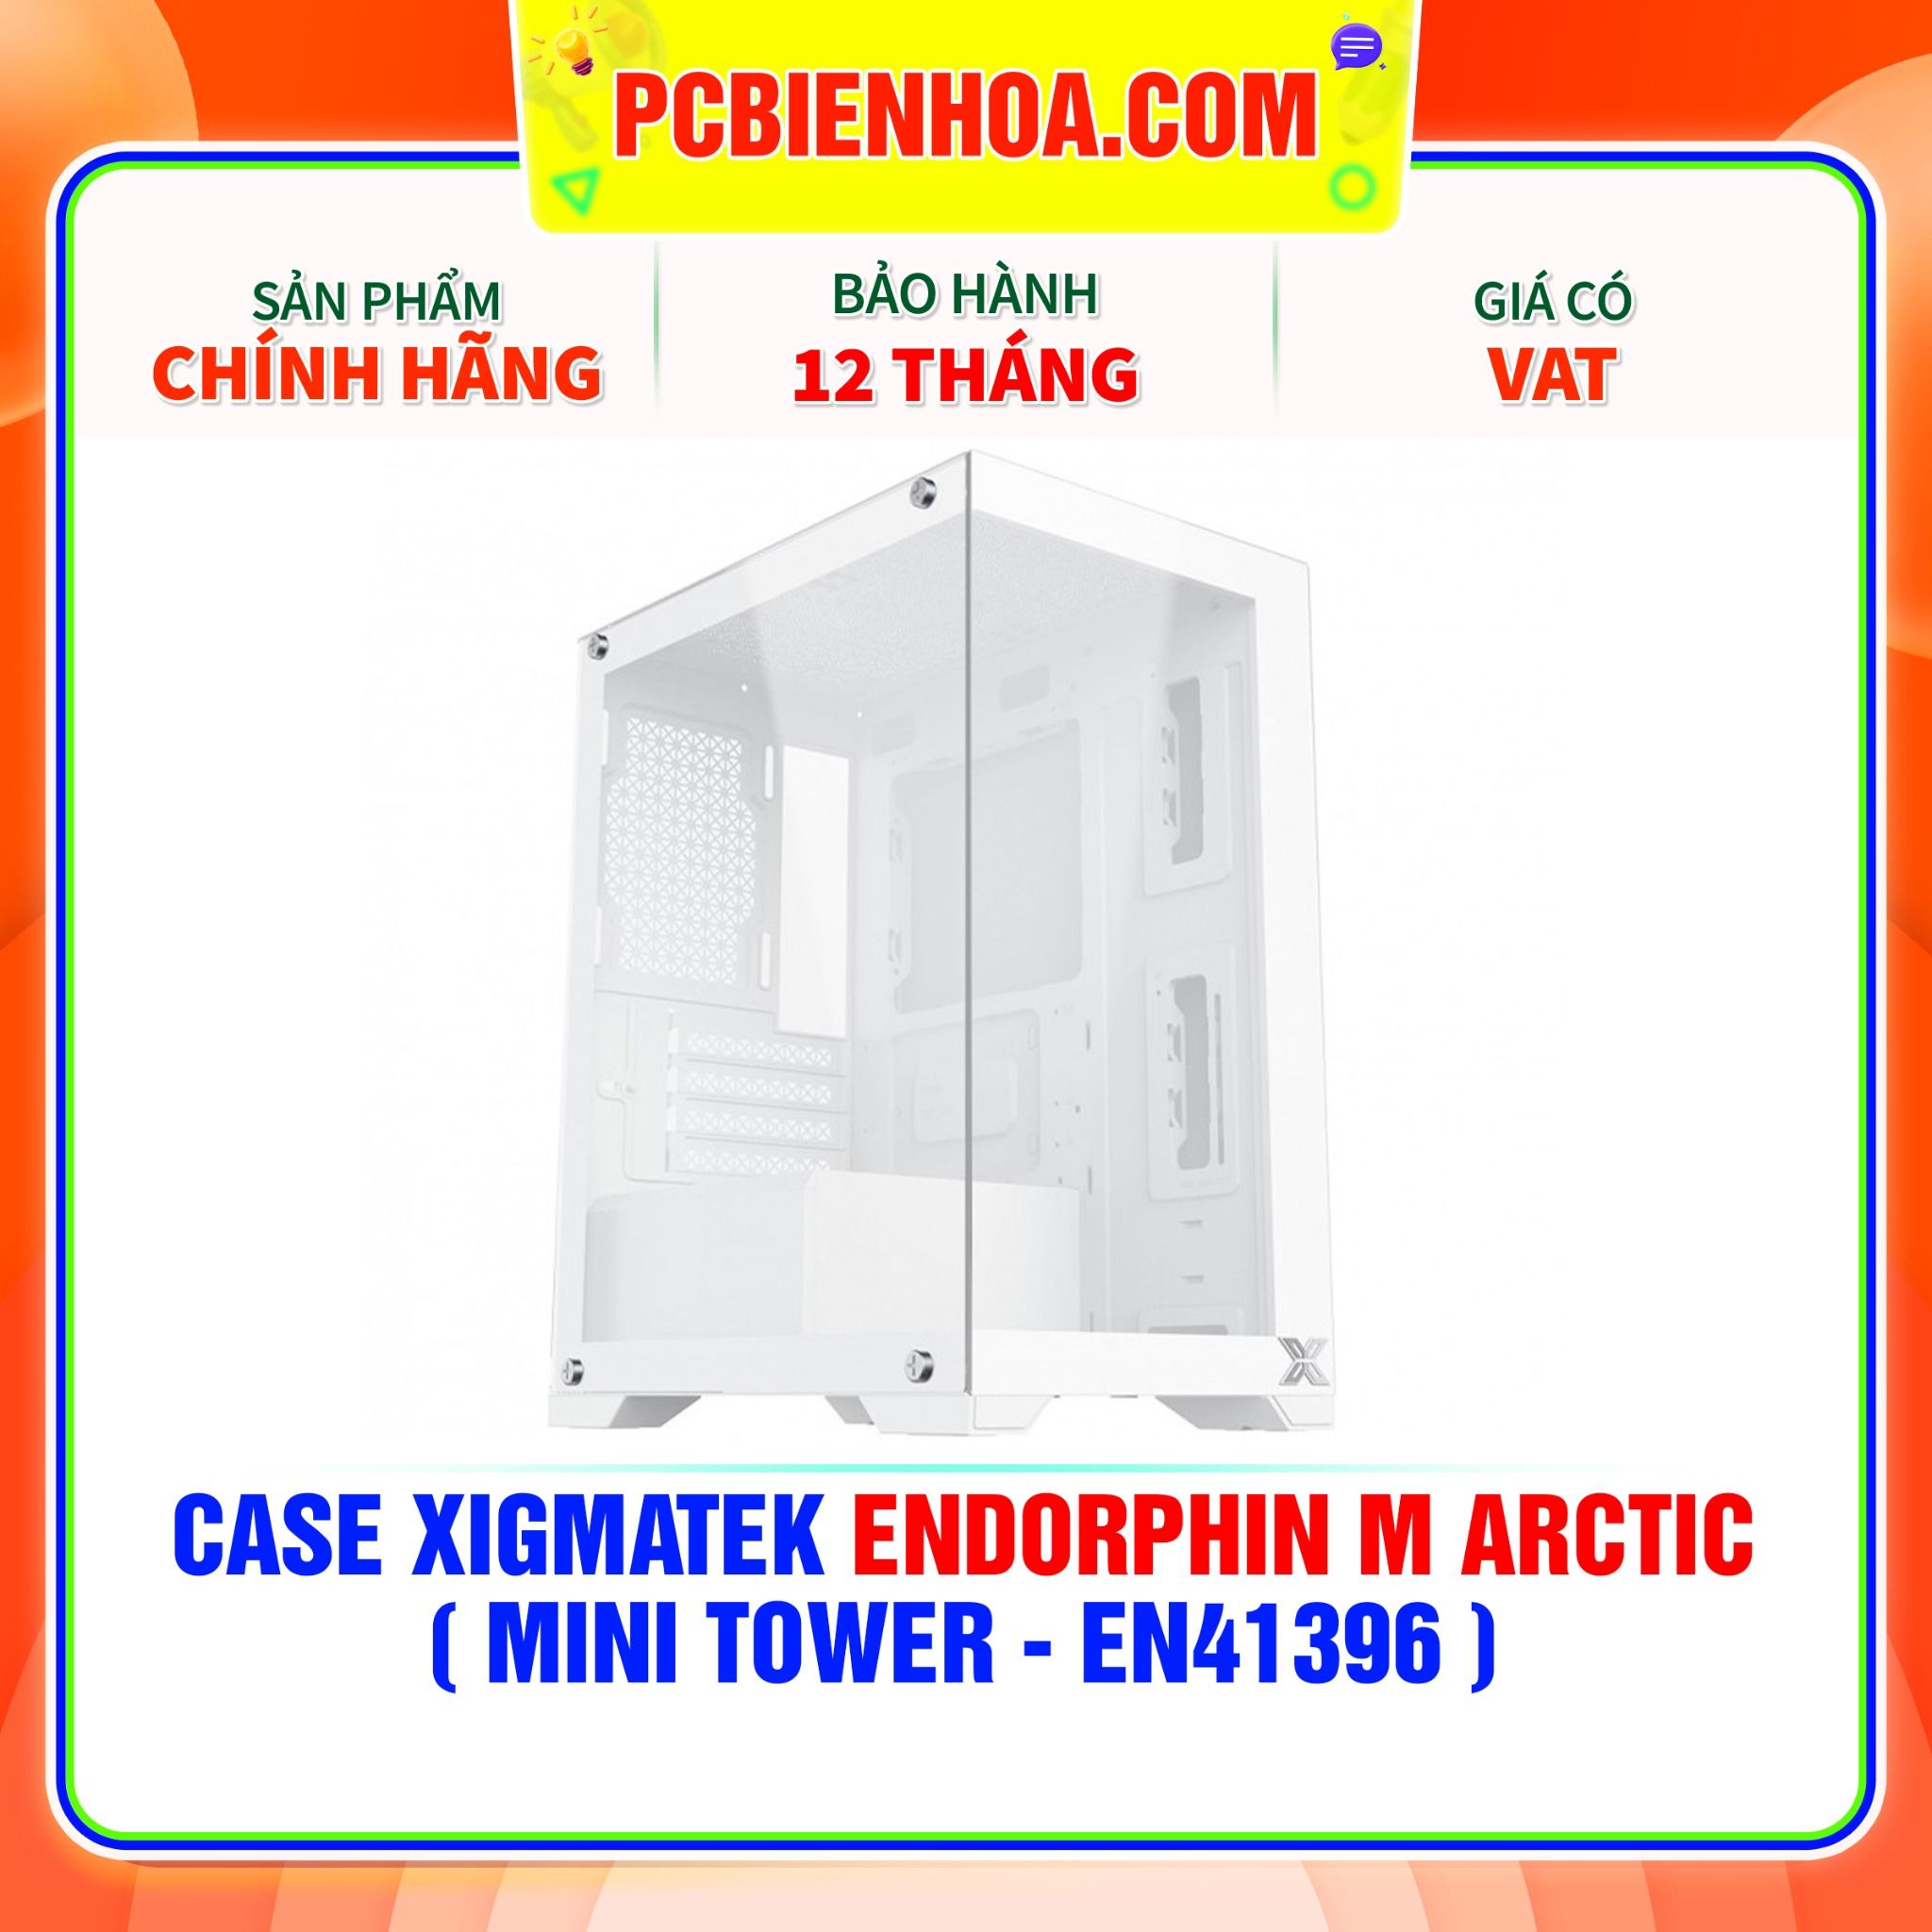  CASE XIGMATEK ENDORPHIN M ARCTIC ( MINI TOWER - EN41396 ) 